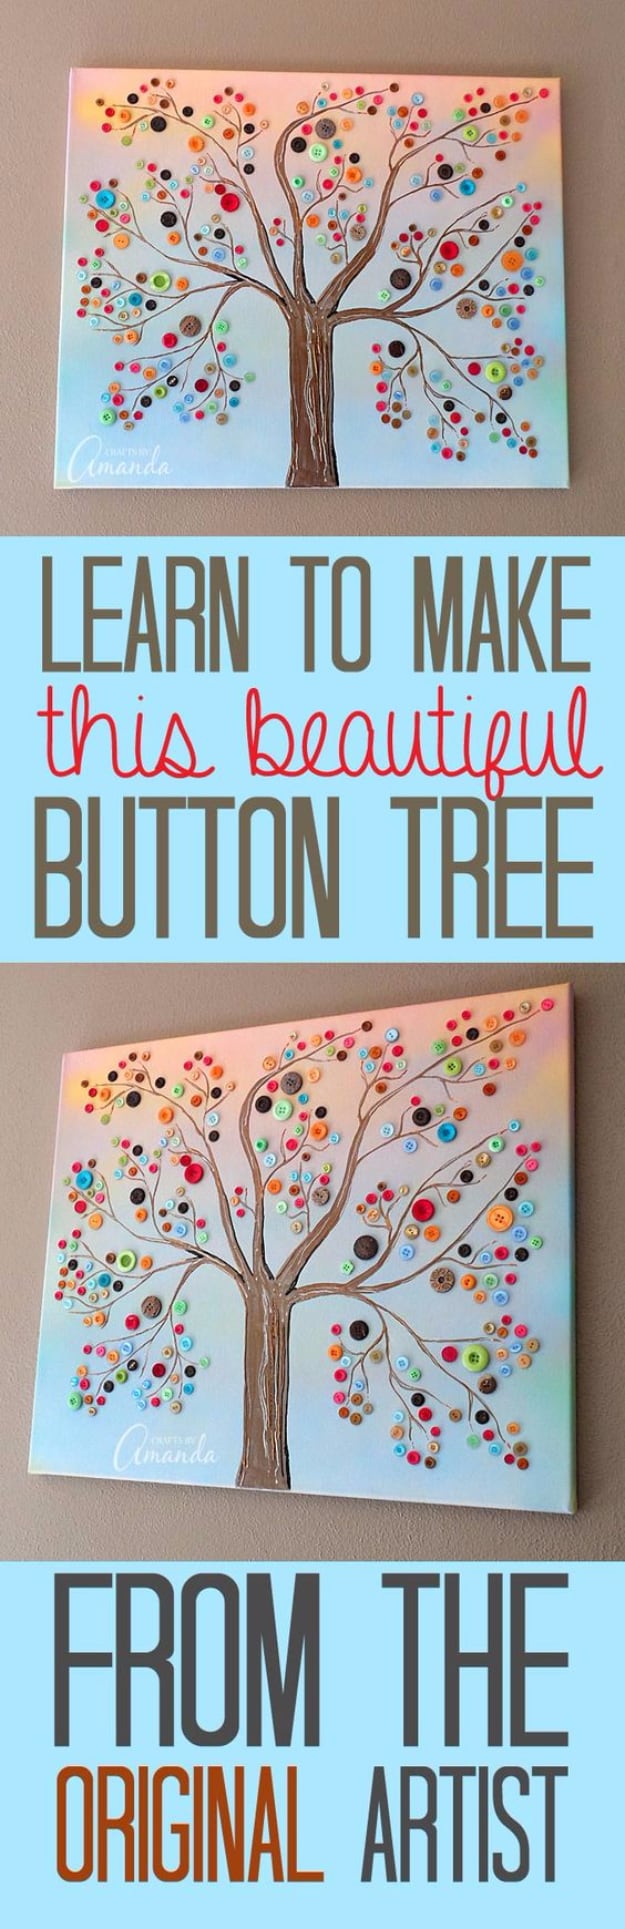 Button tree canvas art